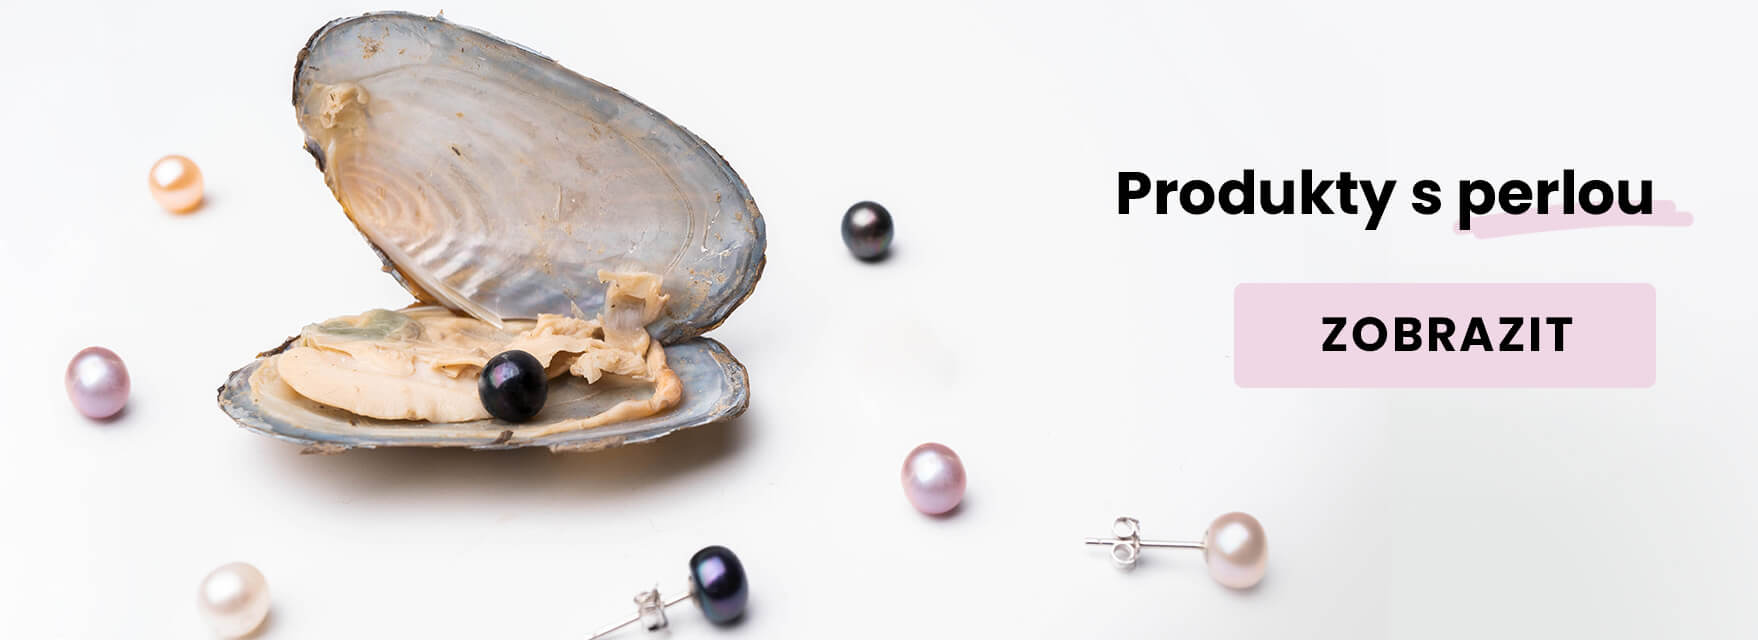 Produkty s perlou